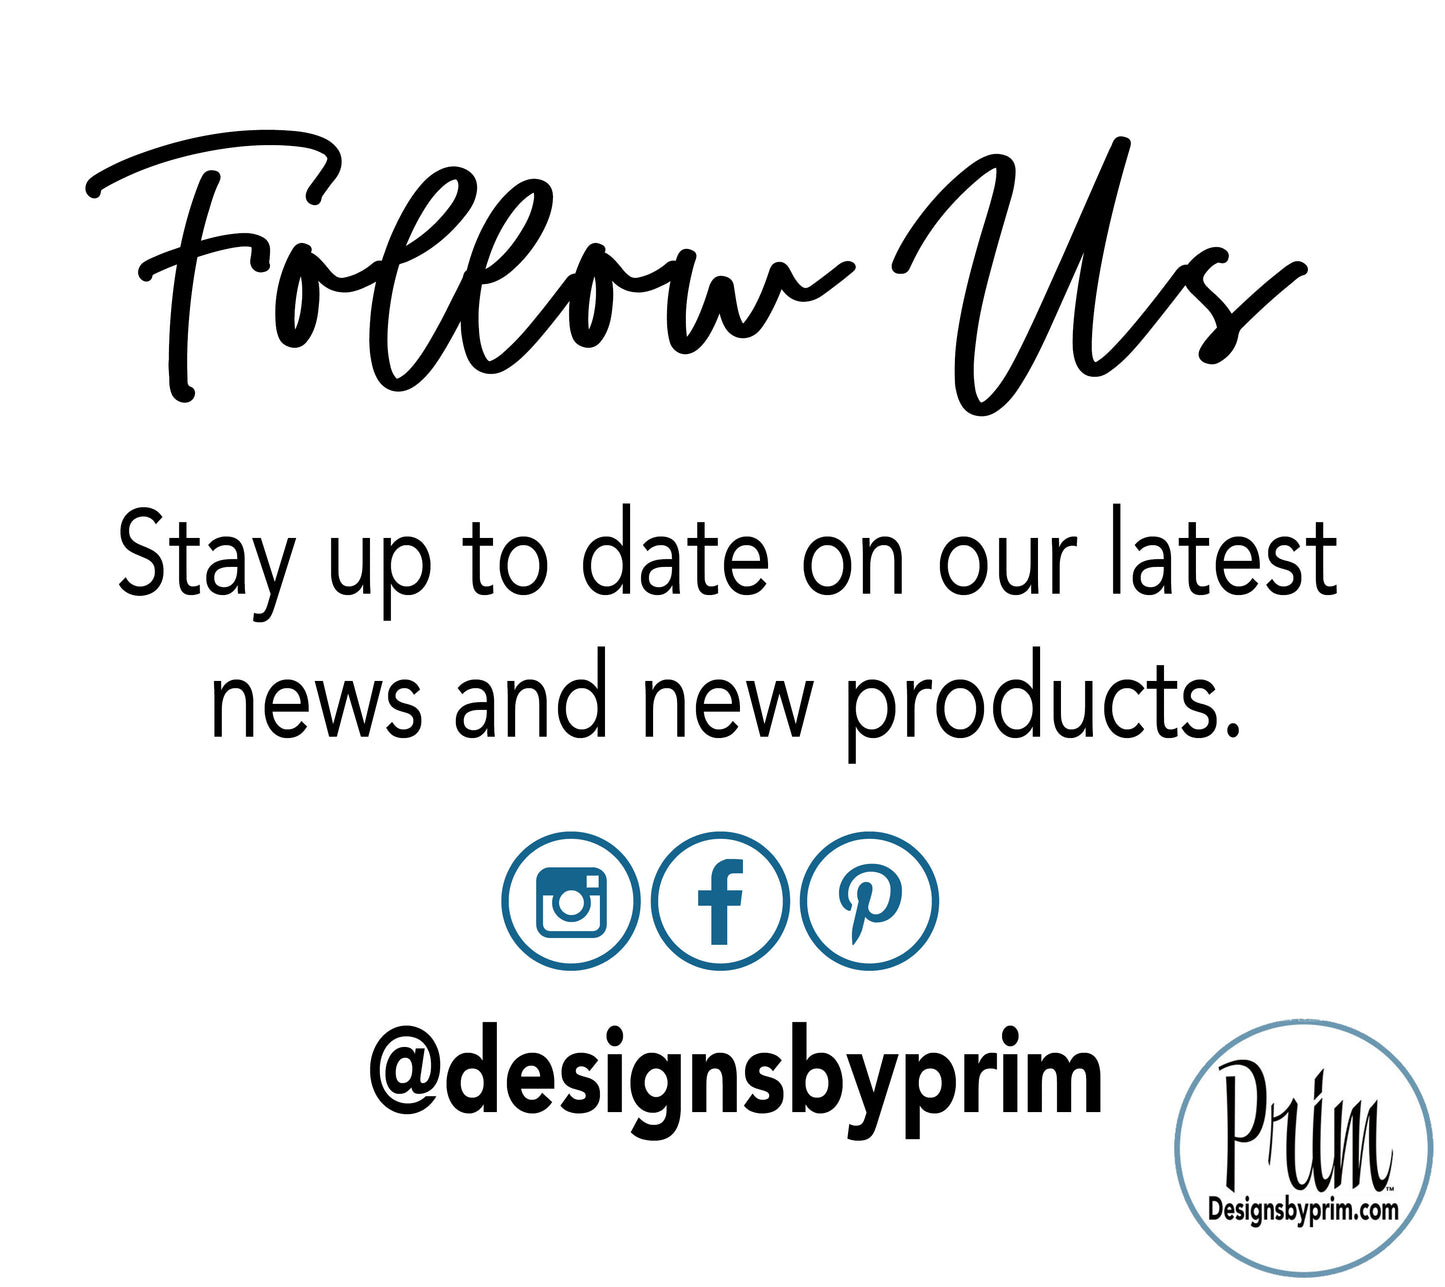 Designs by Prim Custom Wood Signs Follow Us on Instagram @designsbyprim